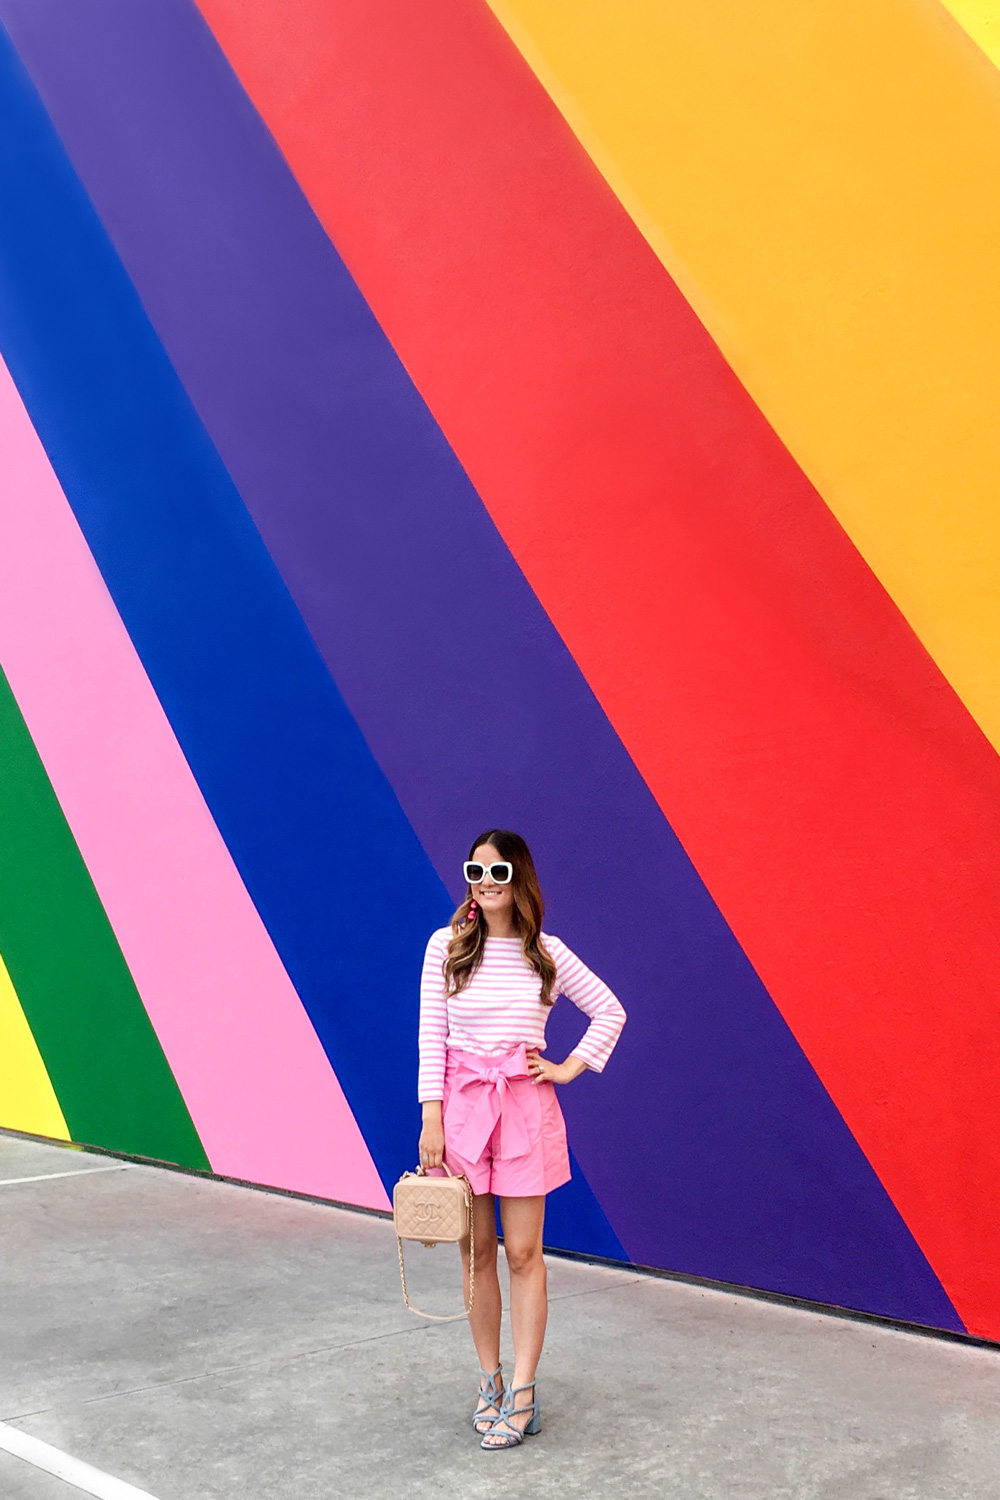 Paul Smith Melrose Rainbow Mural Los Angeles